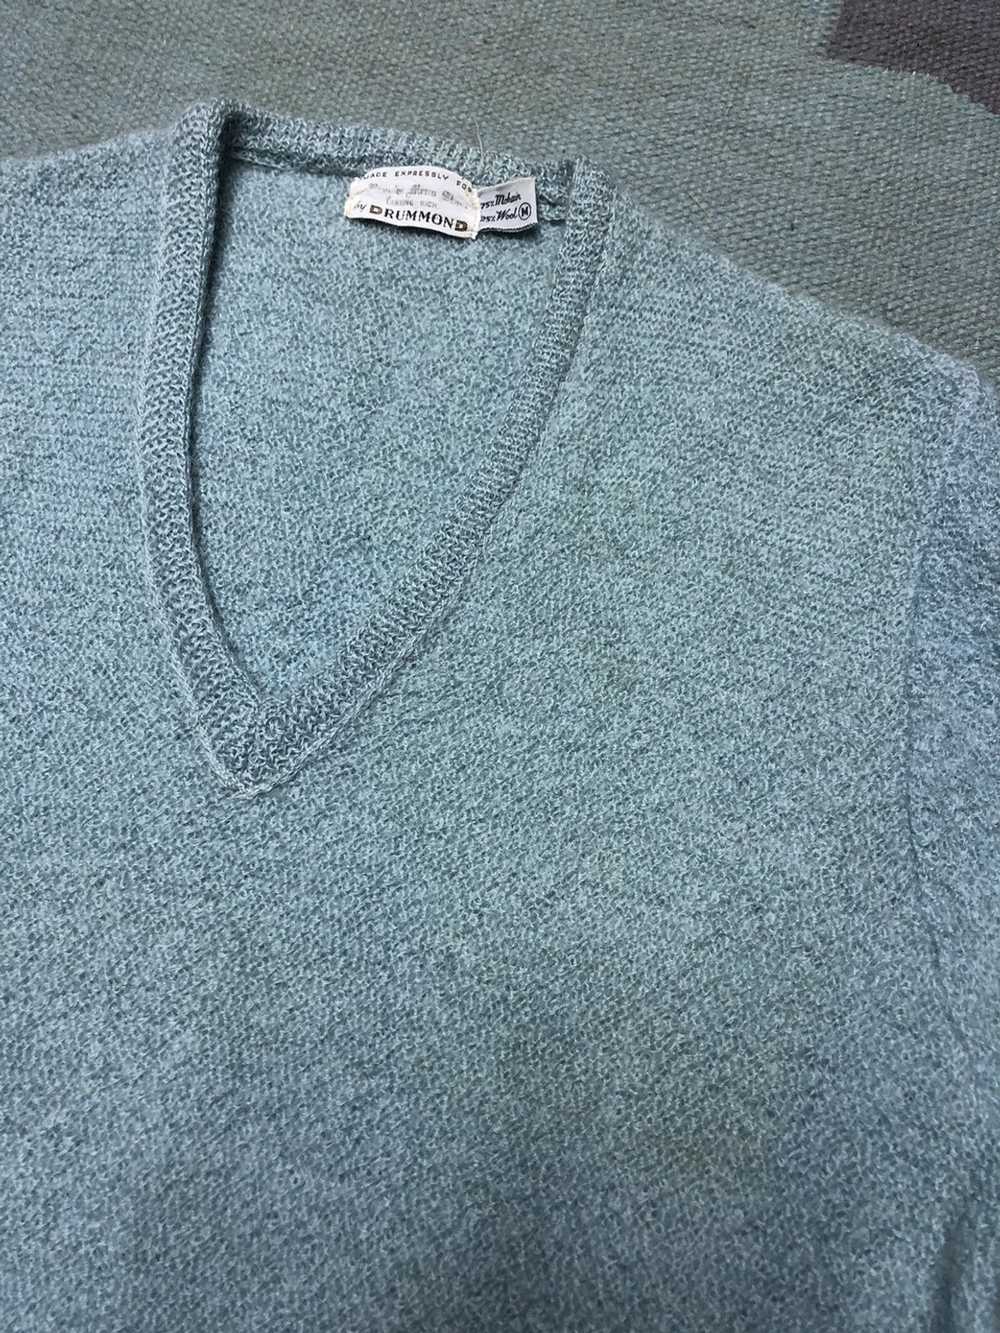 Vintage Vintage 1960s Mohair Sweater Drummond 75%… - image 4